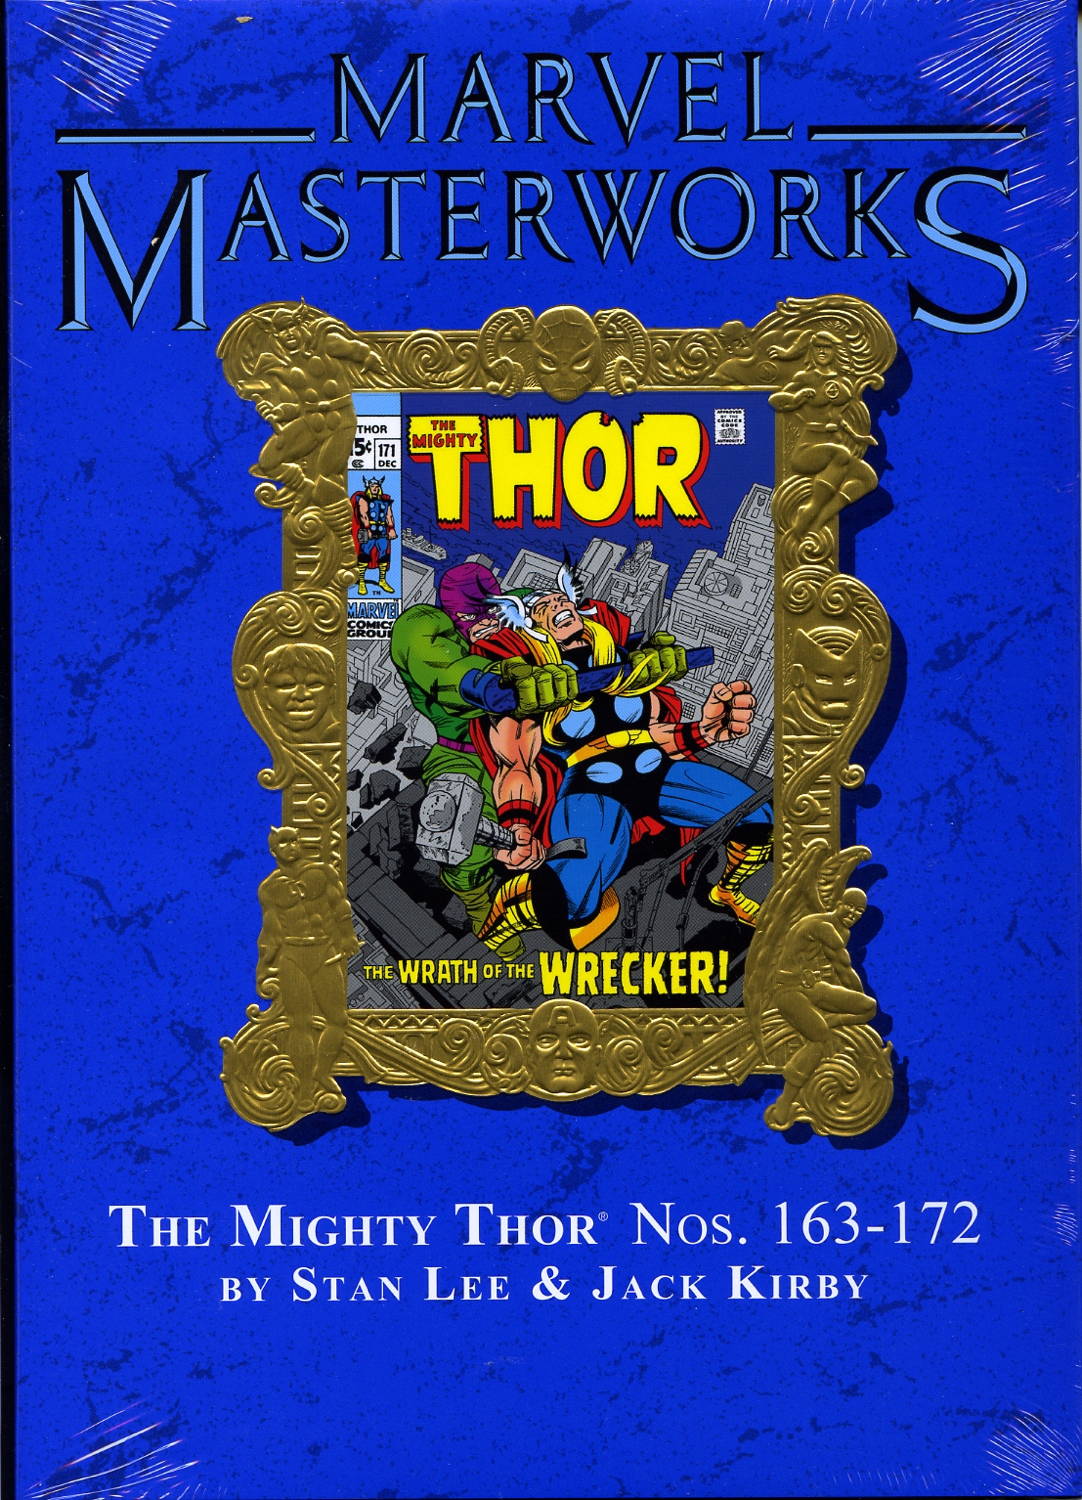 mighty marvel masterworks vol 2